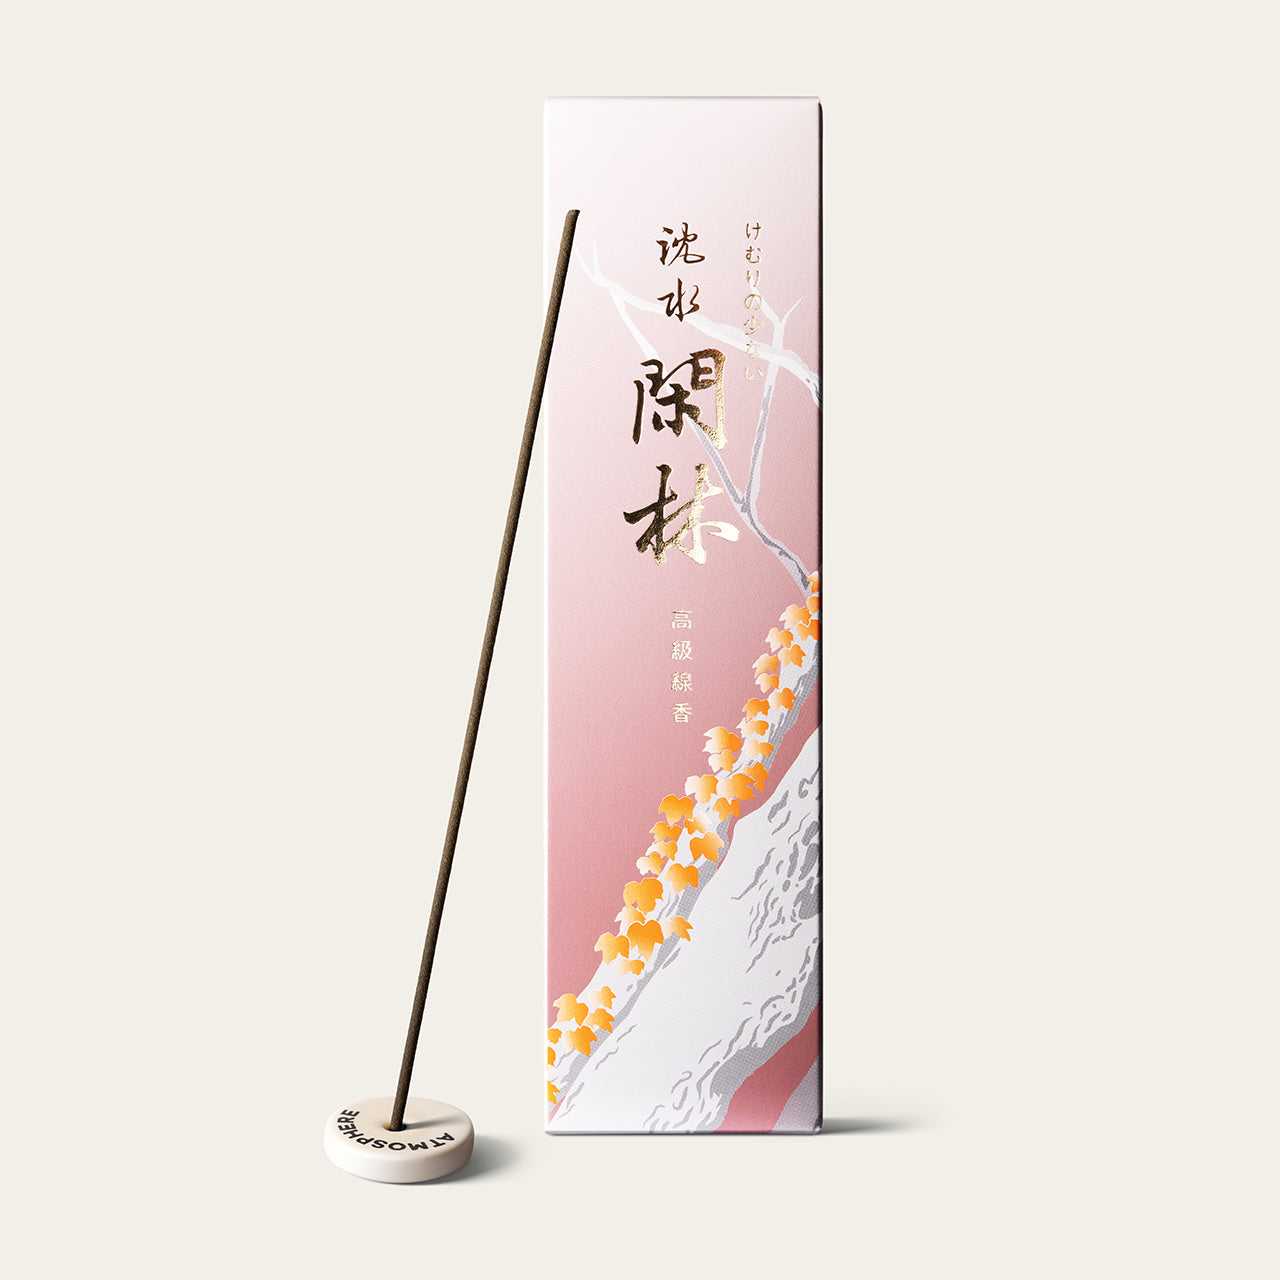 Gyokushodo Jinsui Kanrin Still Woods Japanese incense sticks (25 sticks) with Atmosphere ceramic incense holder